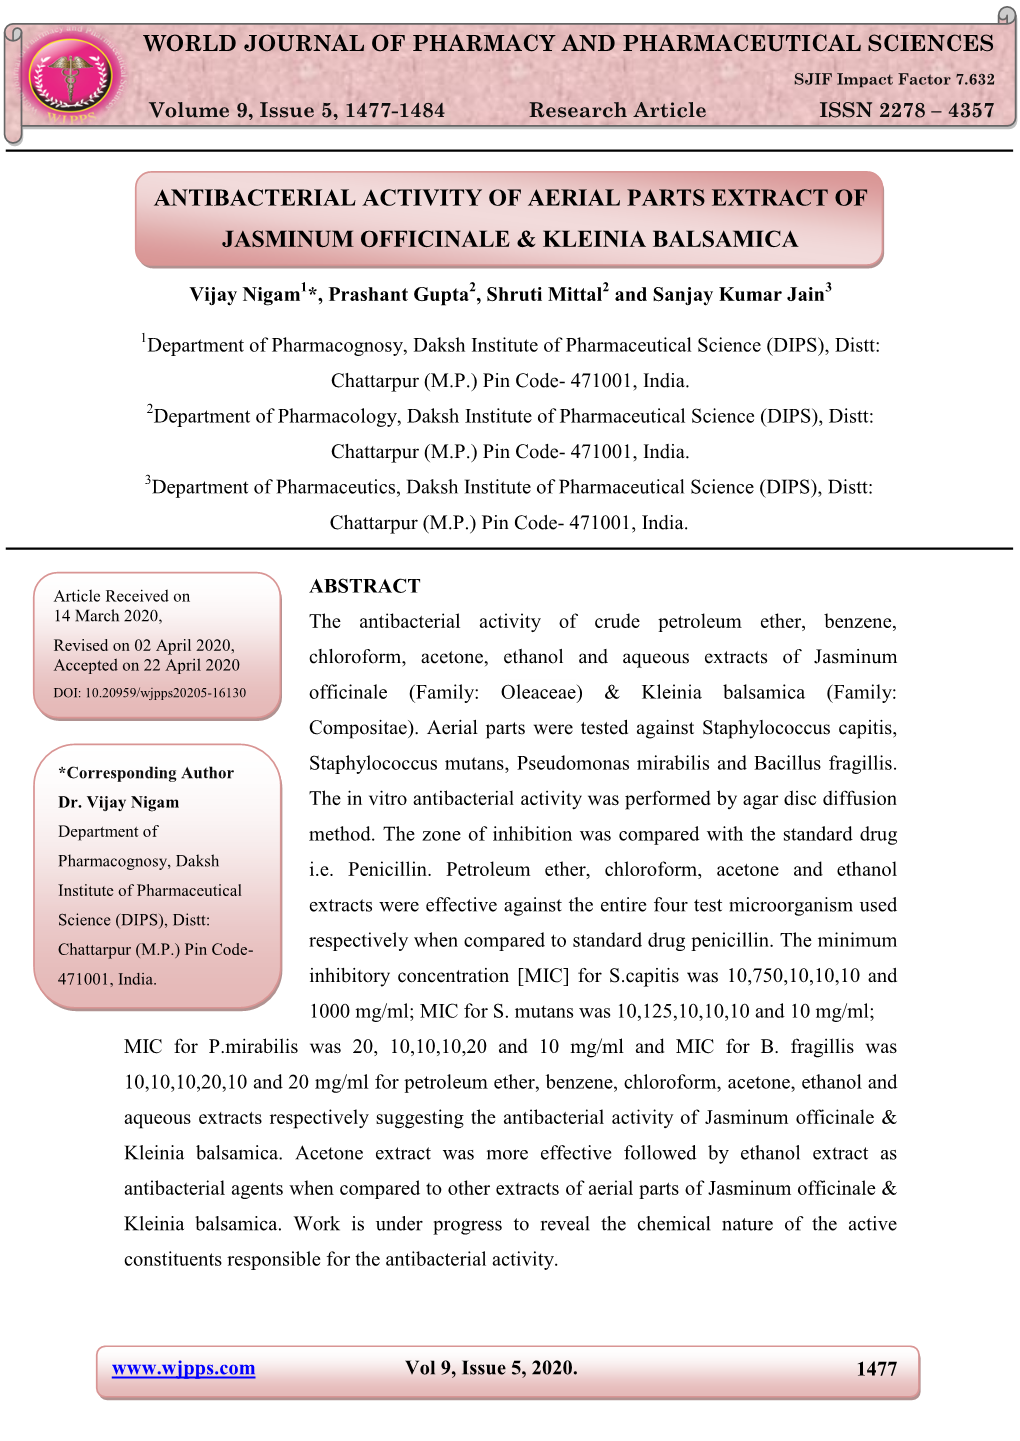 Antibacterial Activity of Aerial Parts Extract of Jasminum Officinale & Kleinia Balsamica